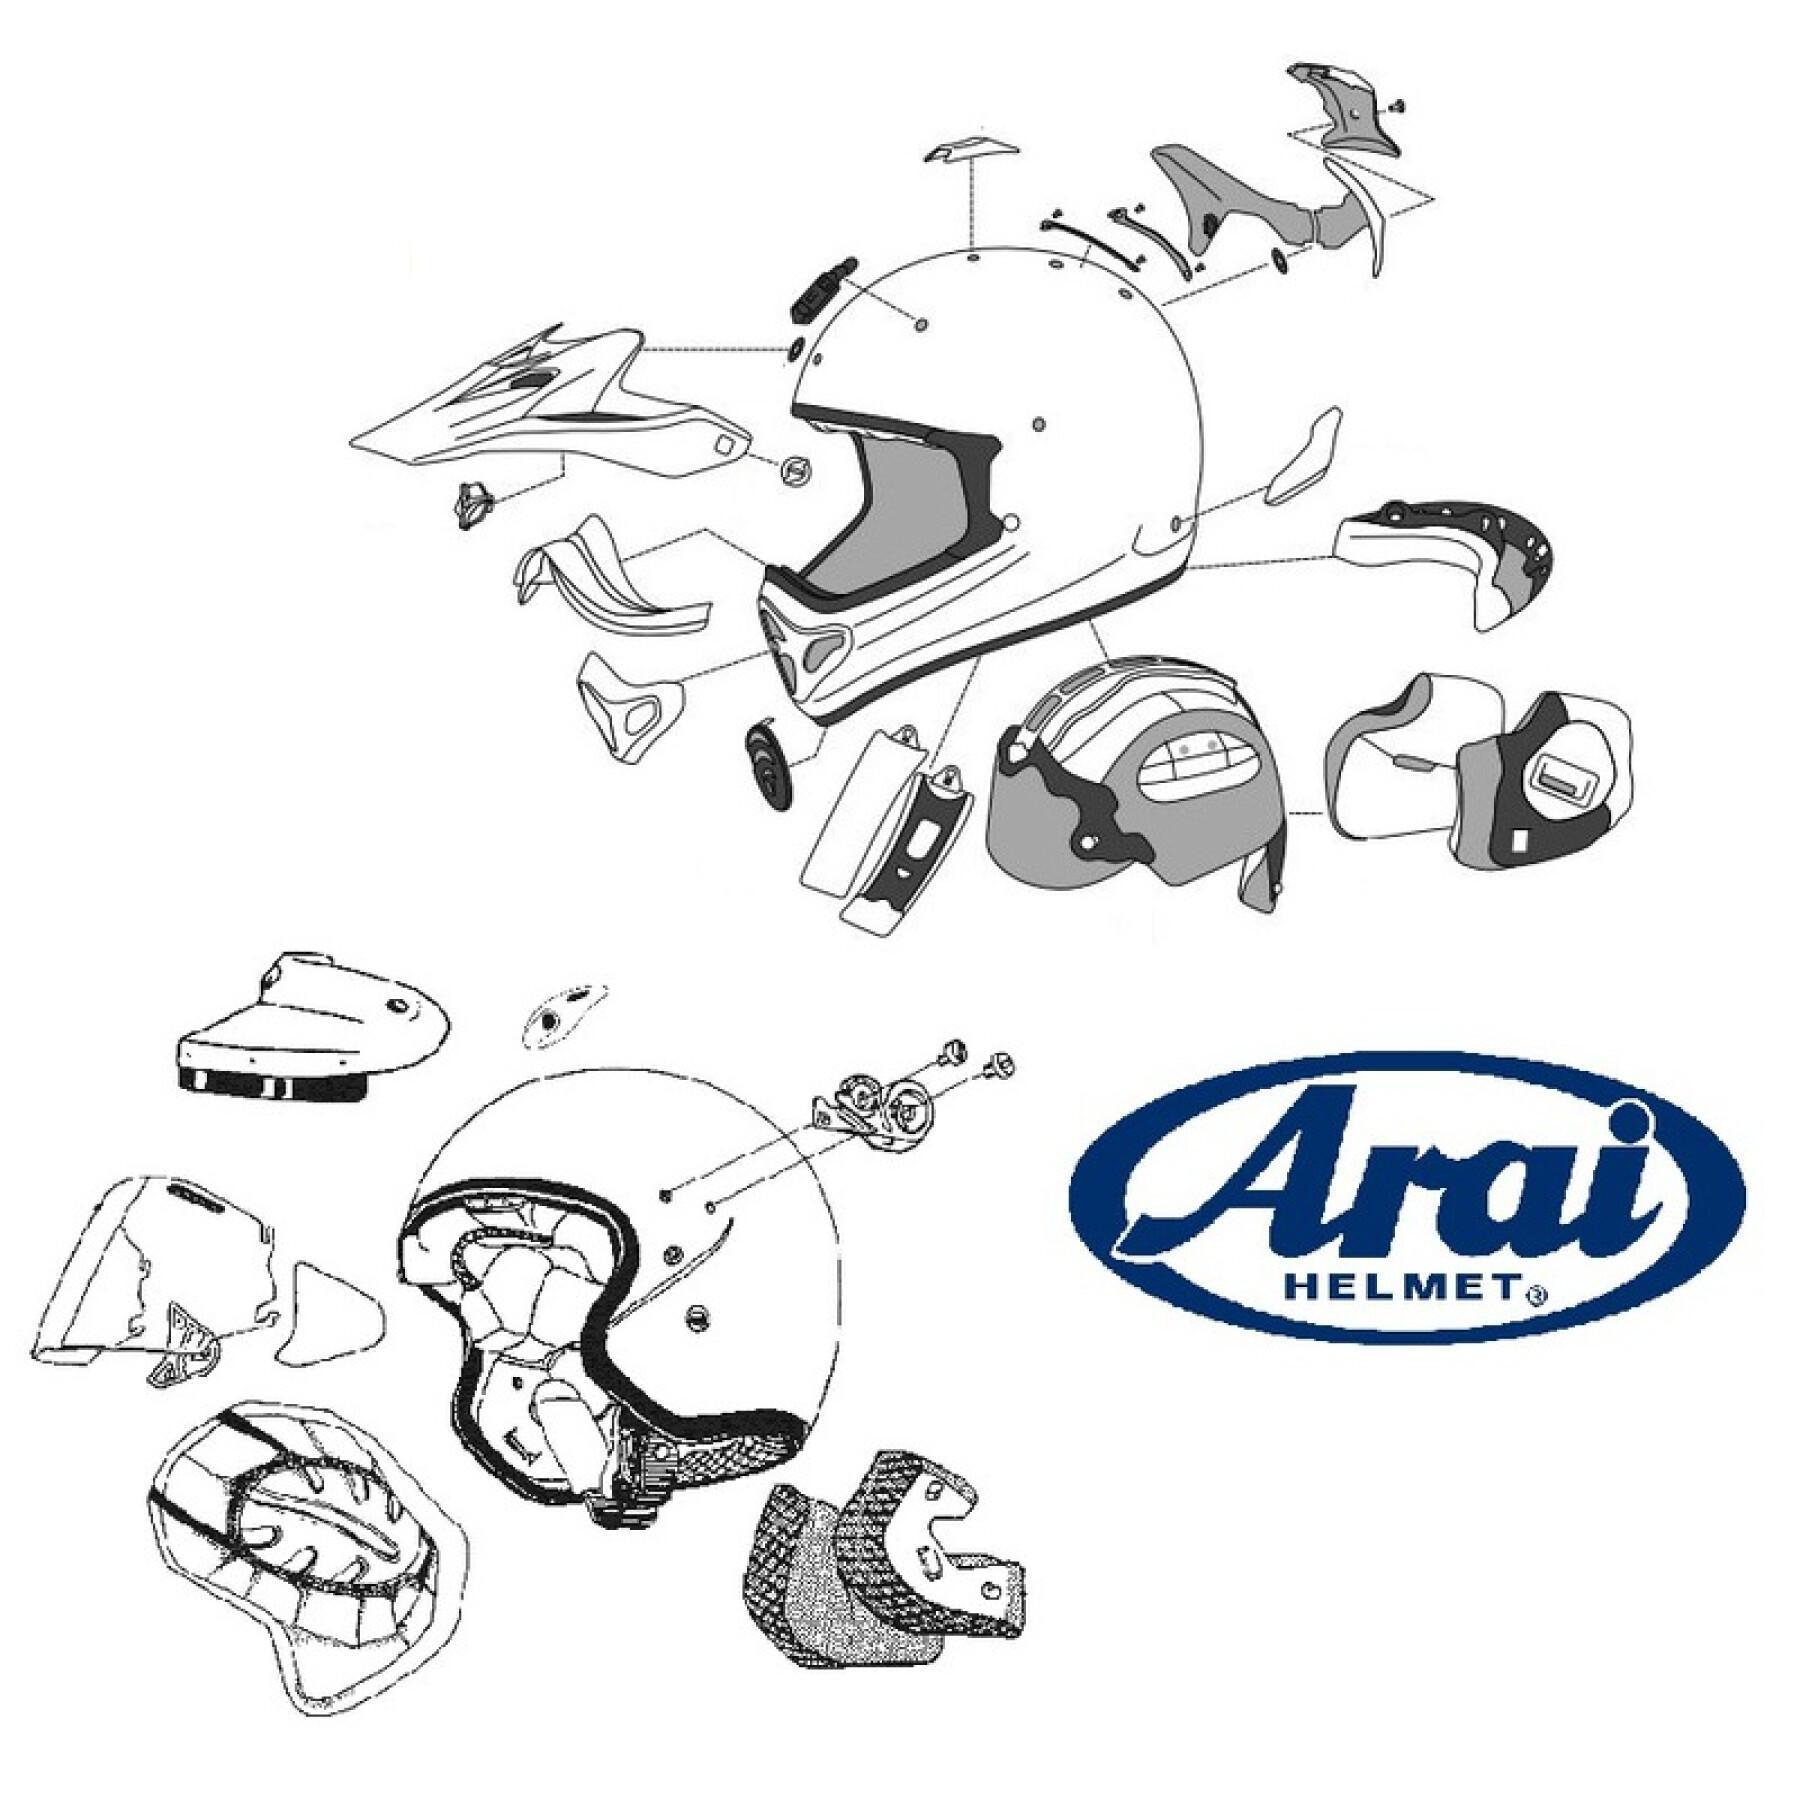 Central ventilation for full face motorcycle helmet Arai